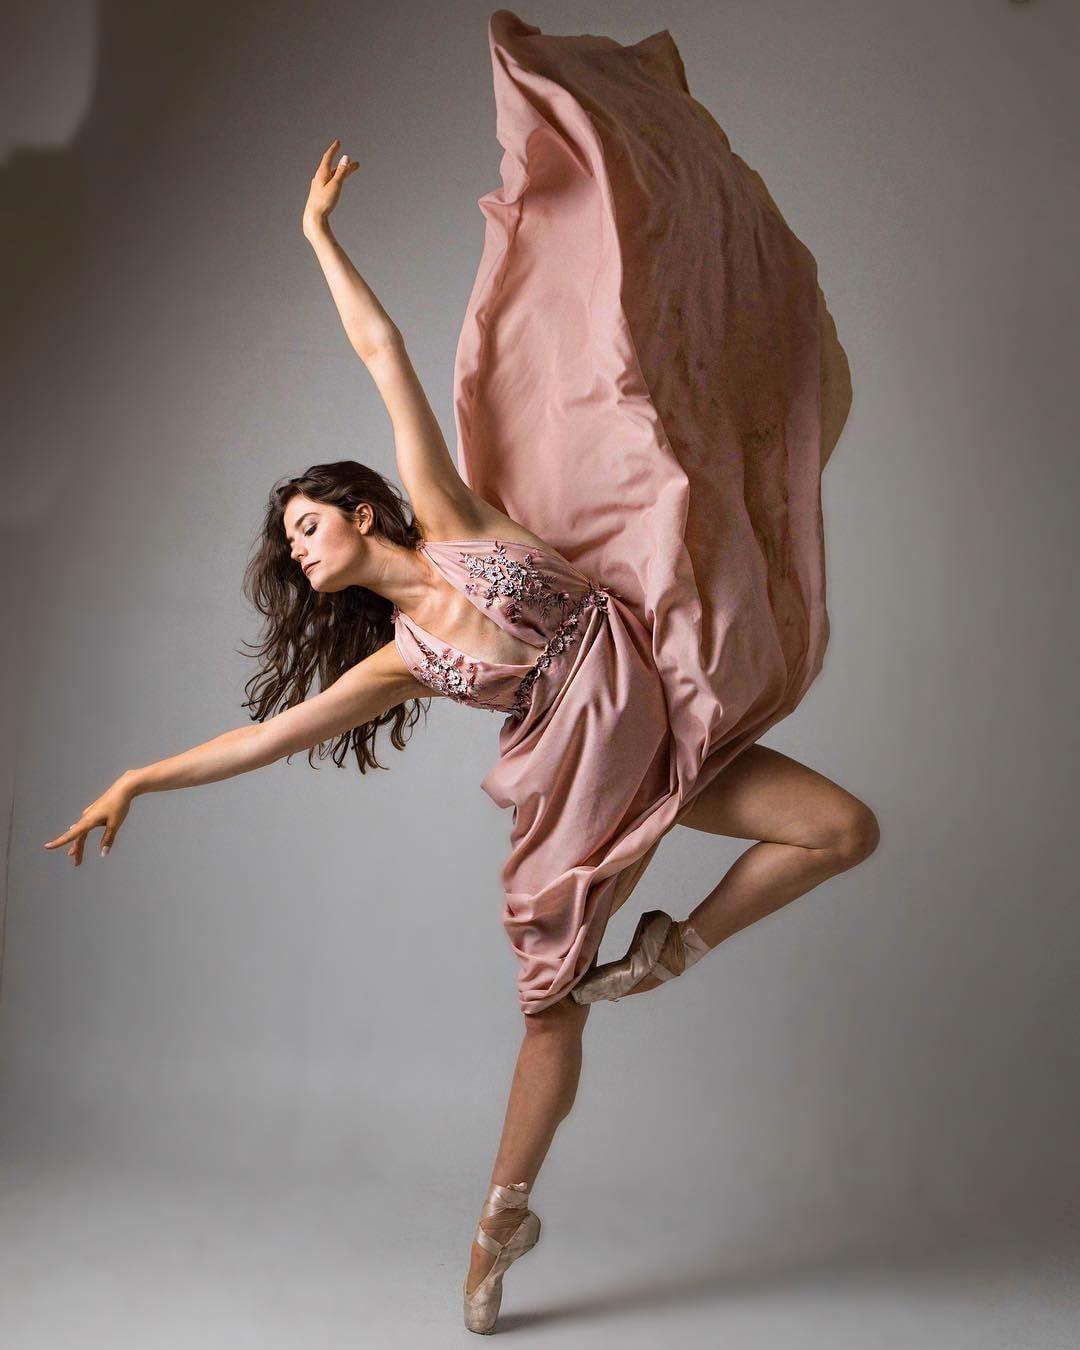 Dancer <3 ballerina #dancer #ballet. Dance photography